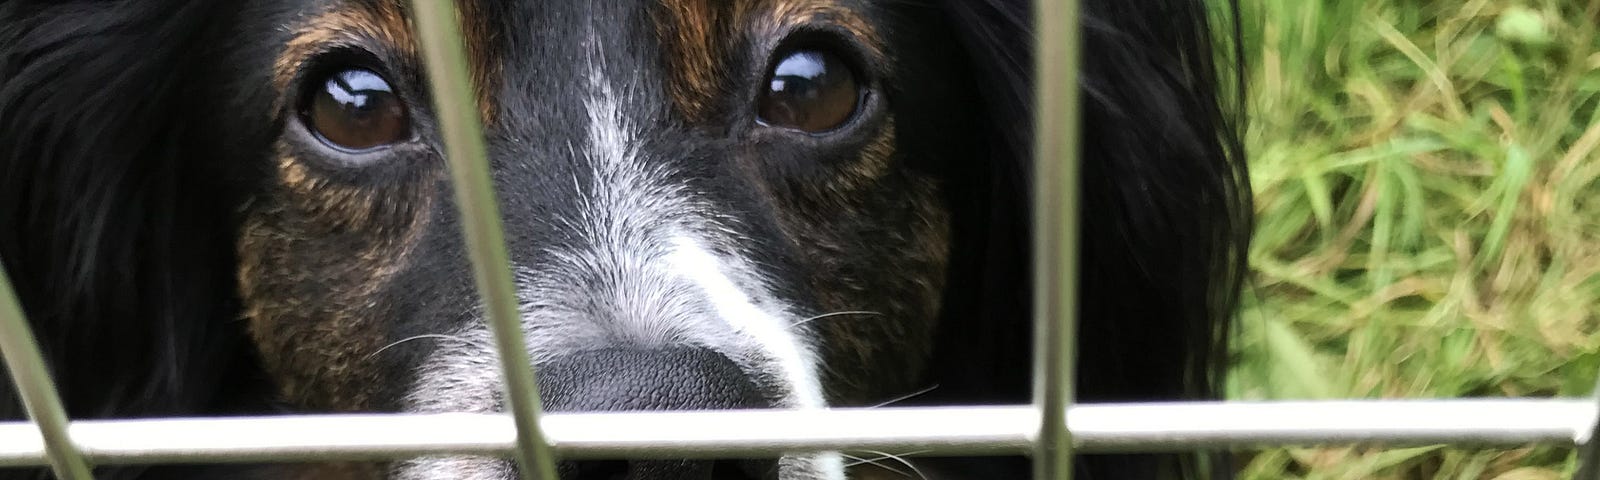 Jack dog behind bars